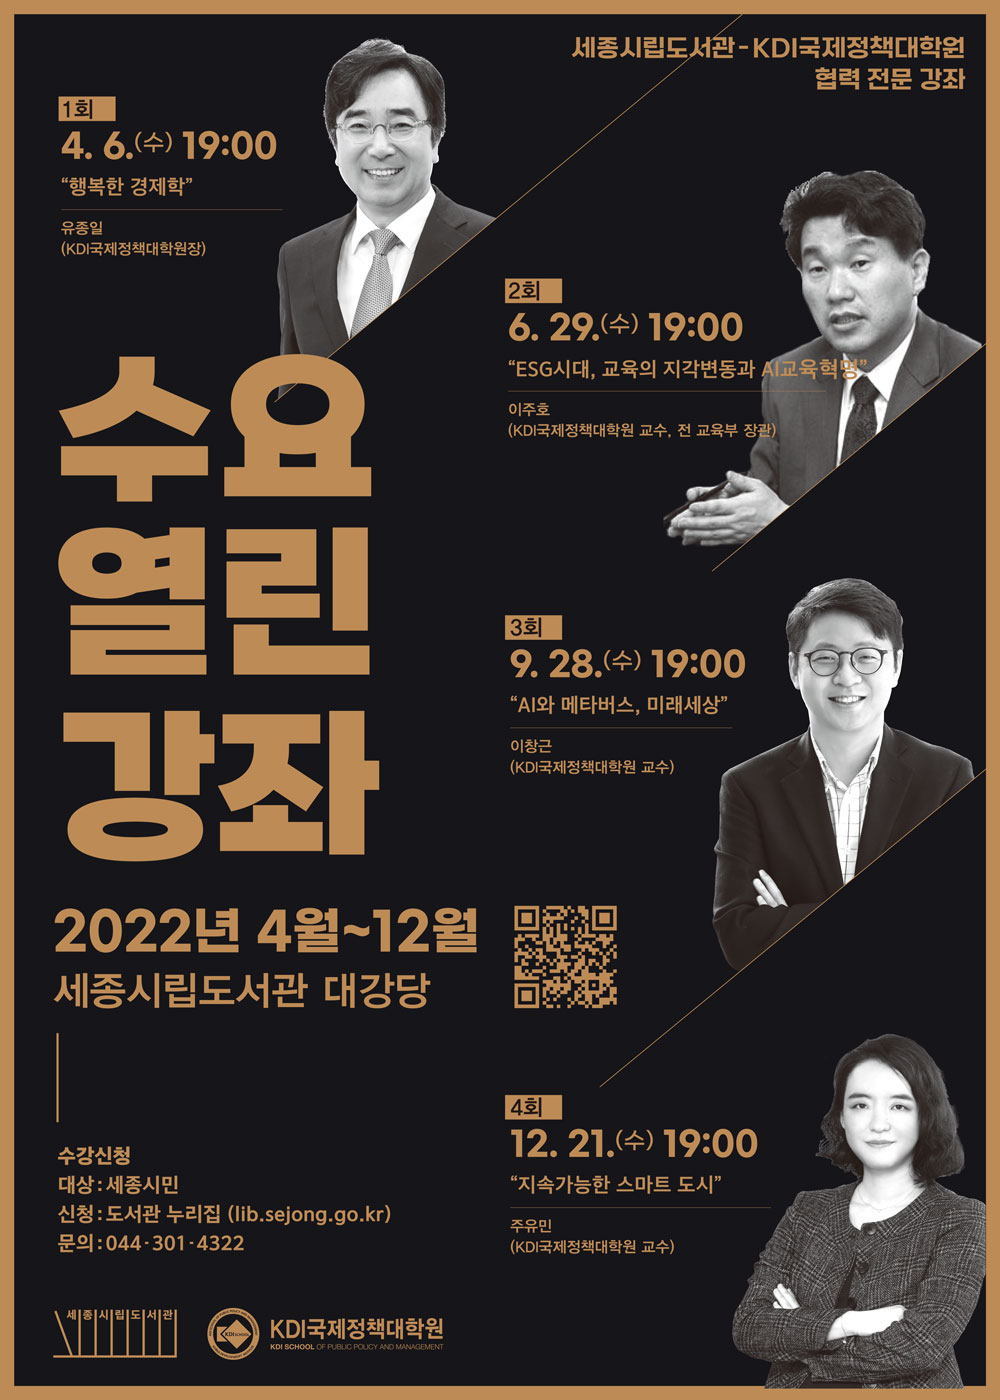 [Invitation] KDI대학원-세종시립도서관 <제 4회 수요열린강좌> (12월 21일(수) 오후 7시)